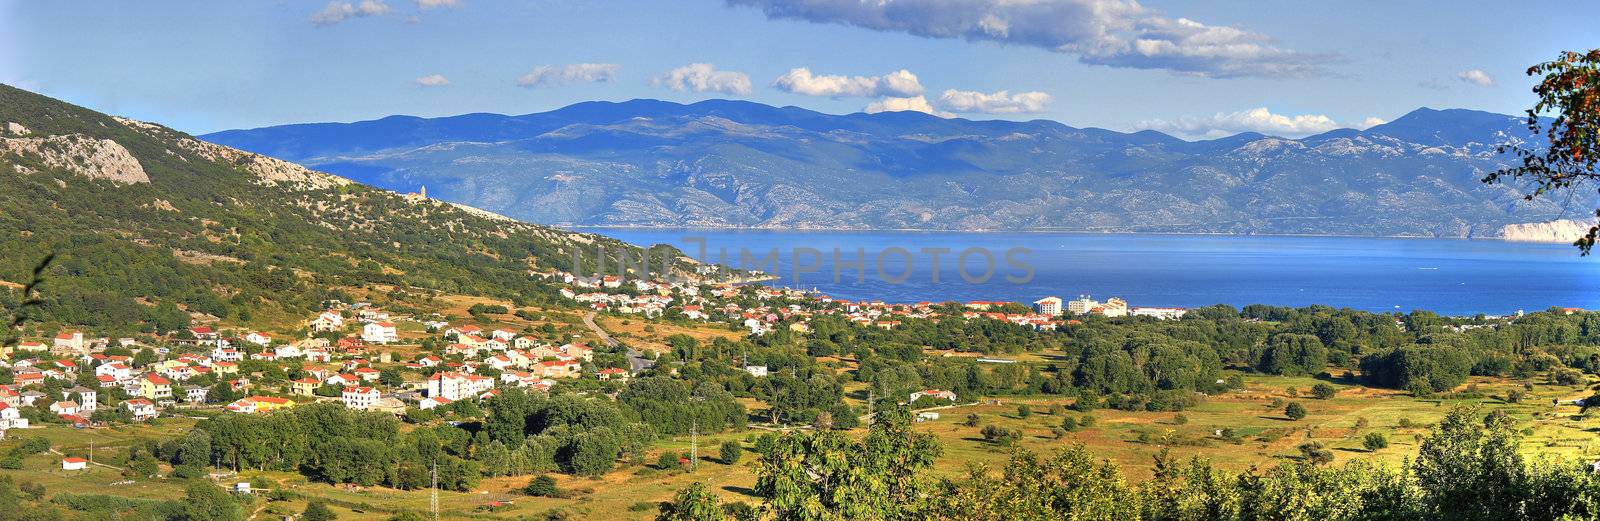 Panoramic view of Baska - croatian beautiful coastal town by xbrchx